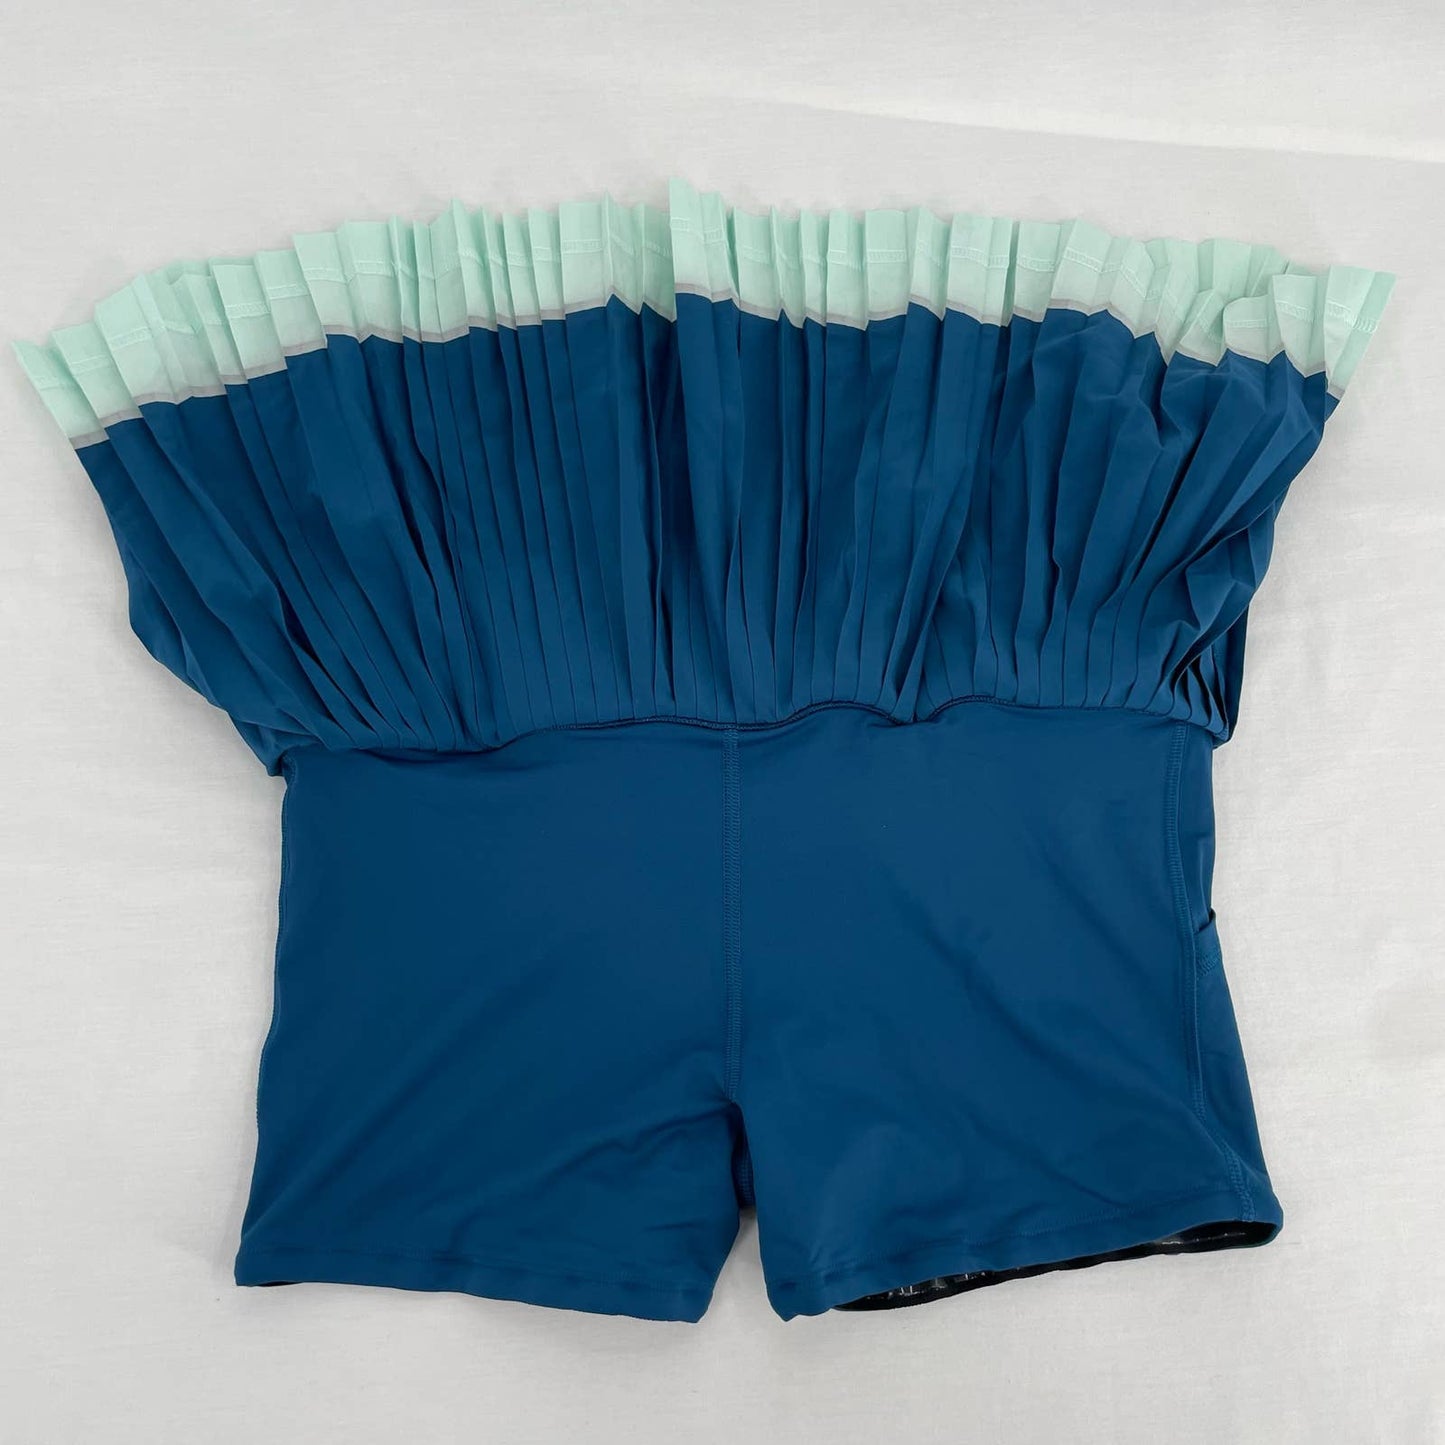 Lululemon Pleat to Street II Blue Aqua Poseidon Sea Mist Skirt Skort Ballerina Size 6